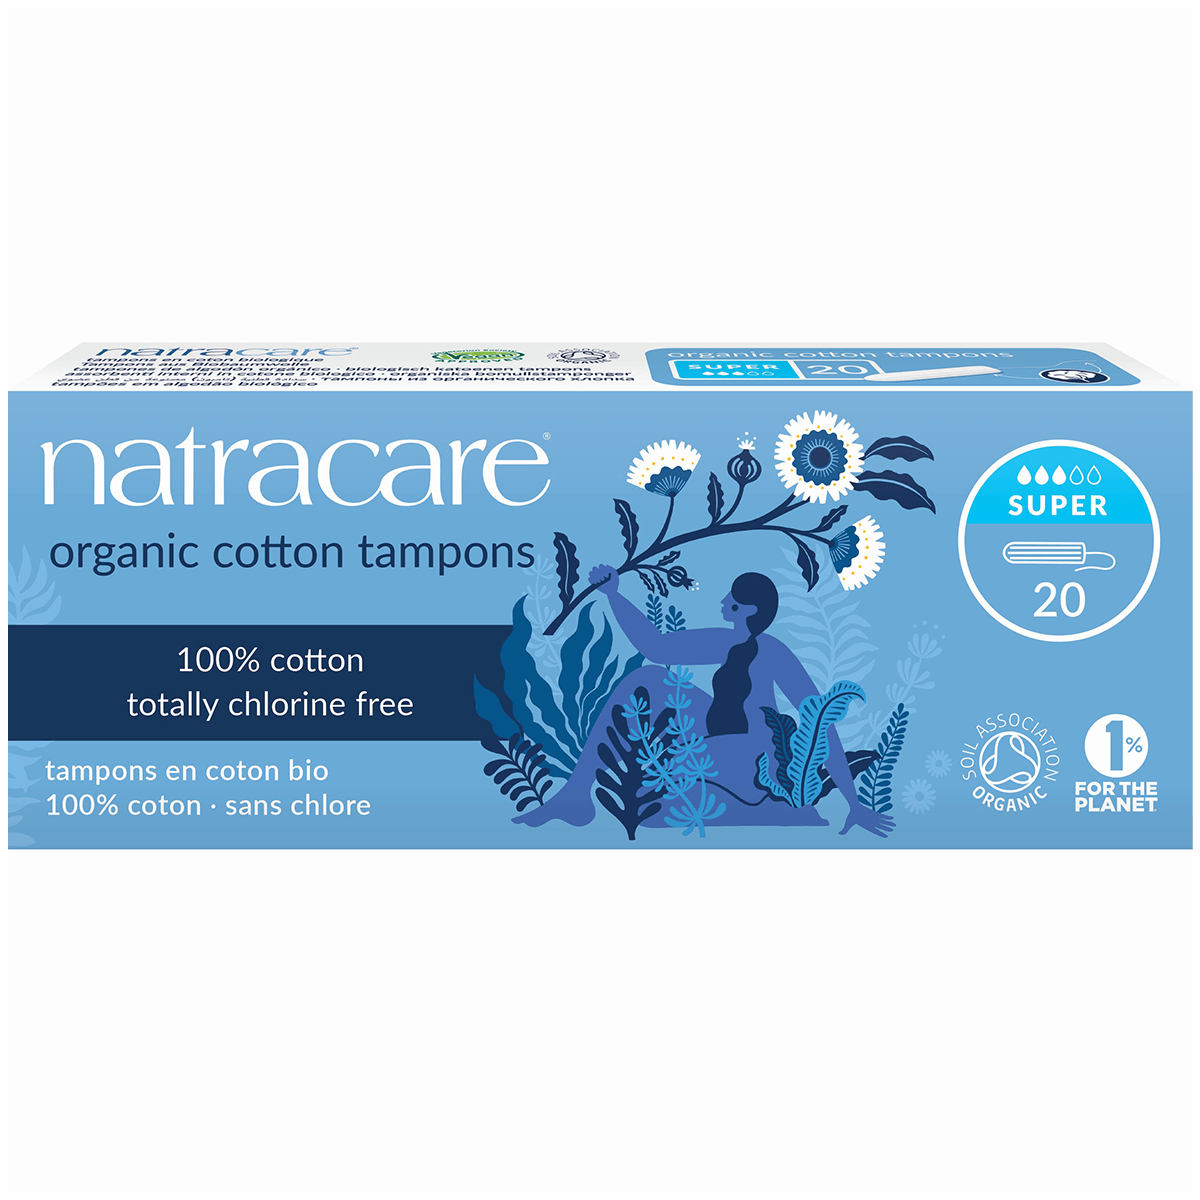 NatraCare Organic Cotton Tampons Super 20 Tampons Feminine Sanitary Supplies at Village Vitamin Store